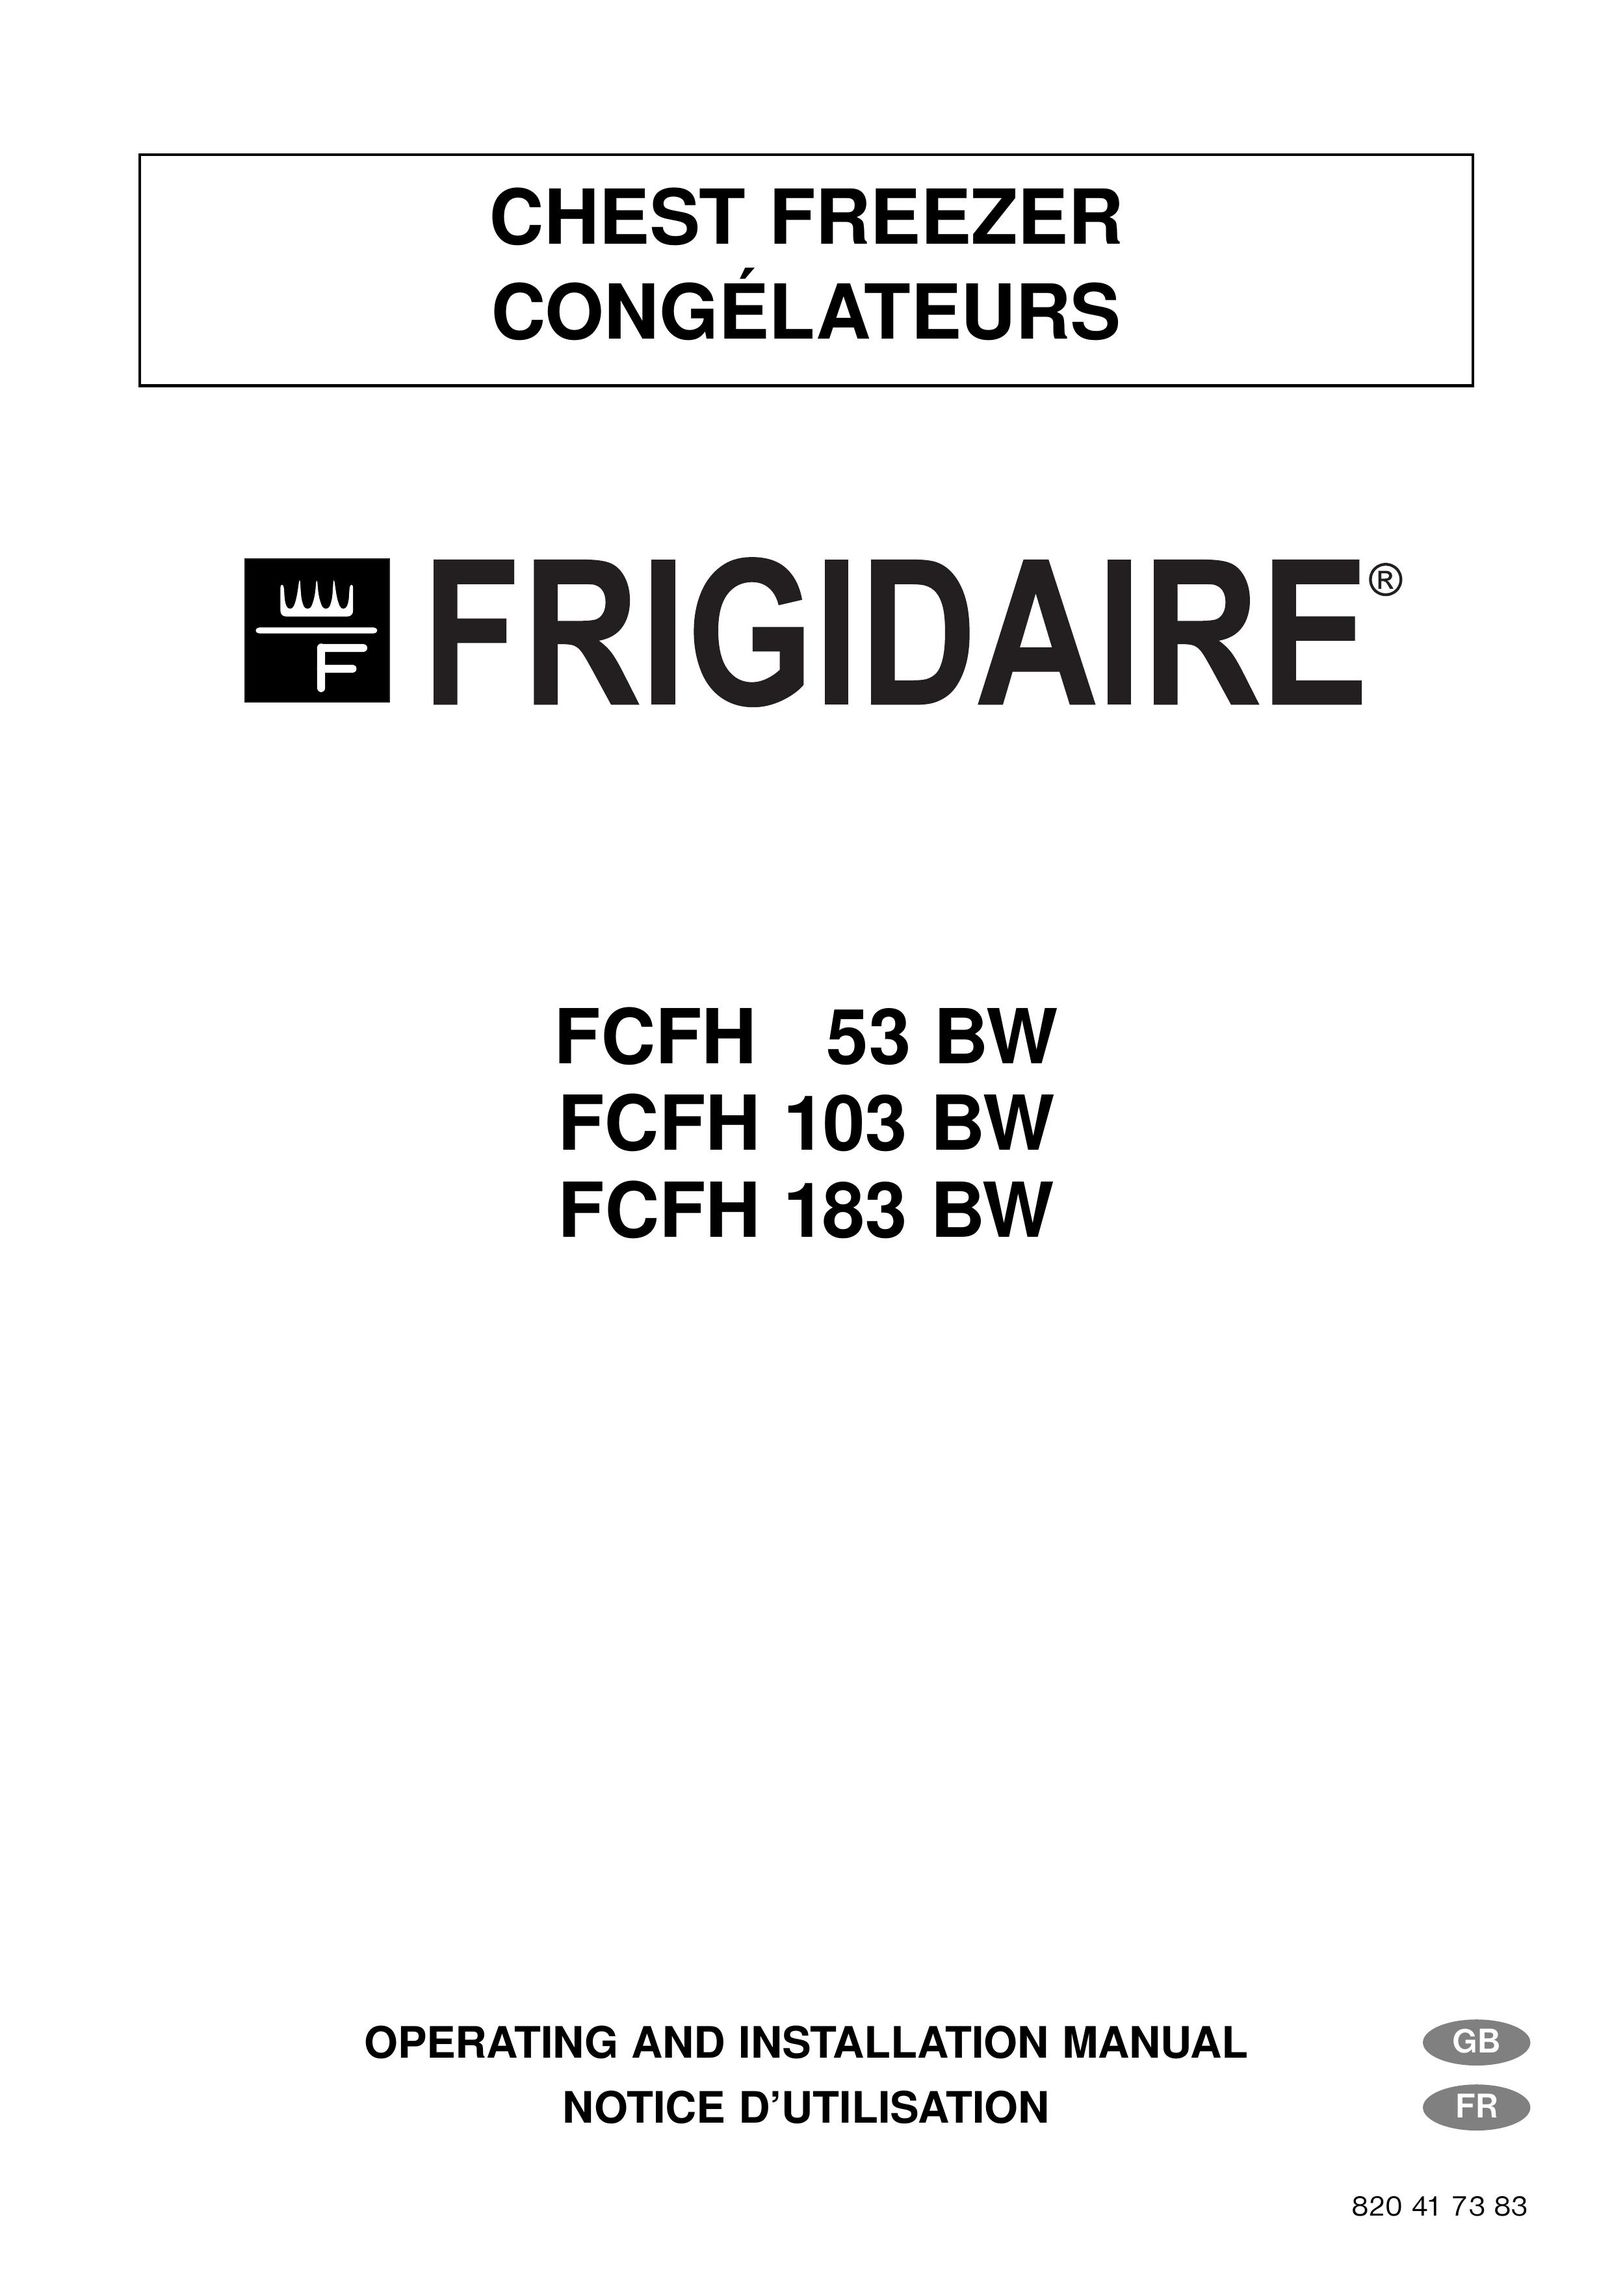 Frigidaire FCFH 103 BW Freezer User Manual